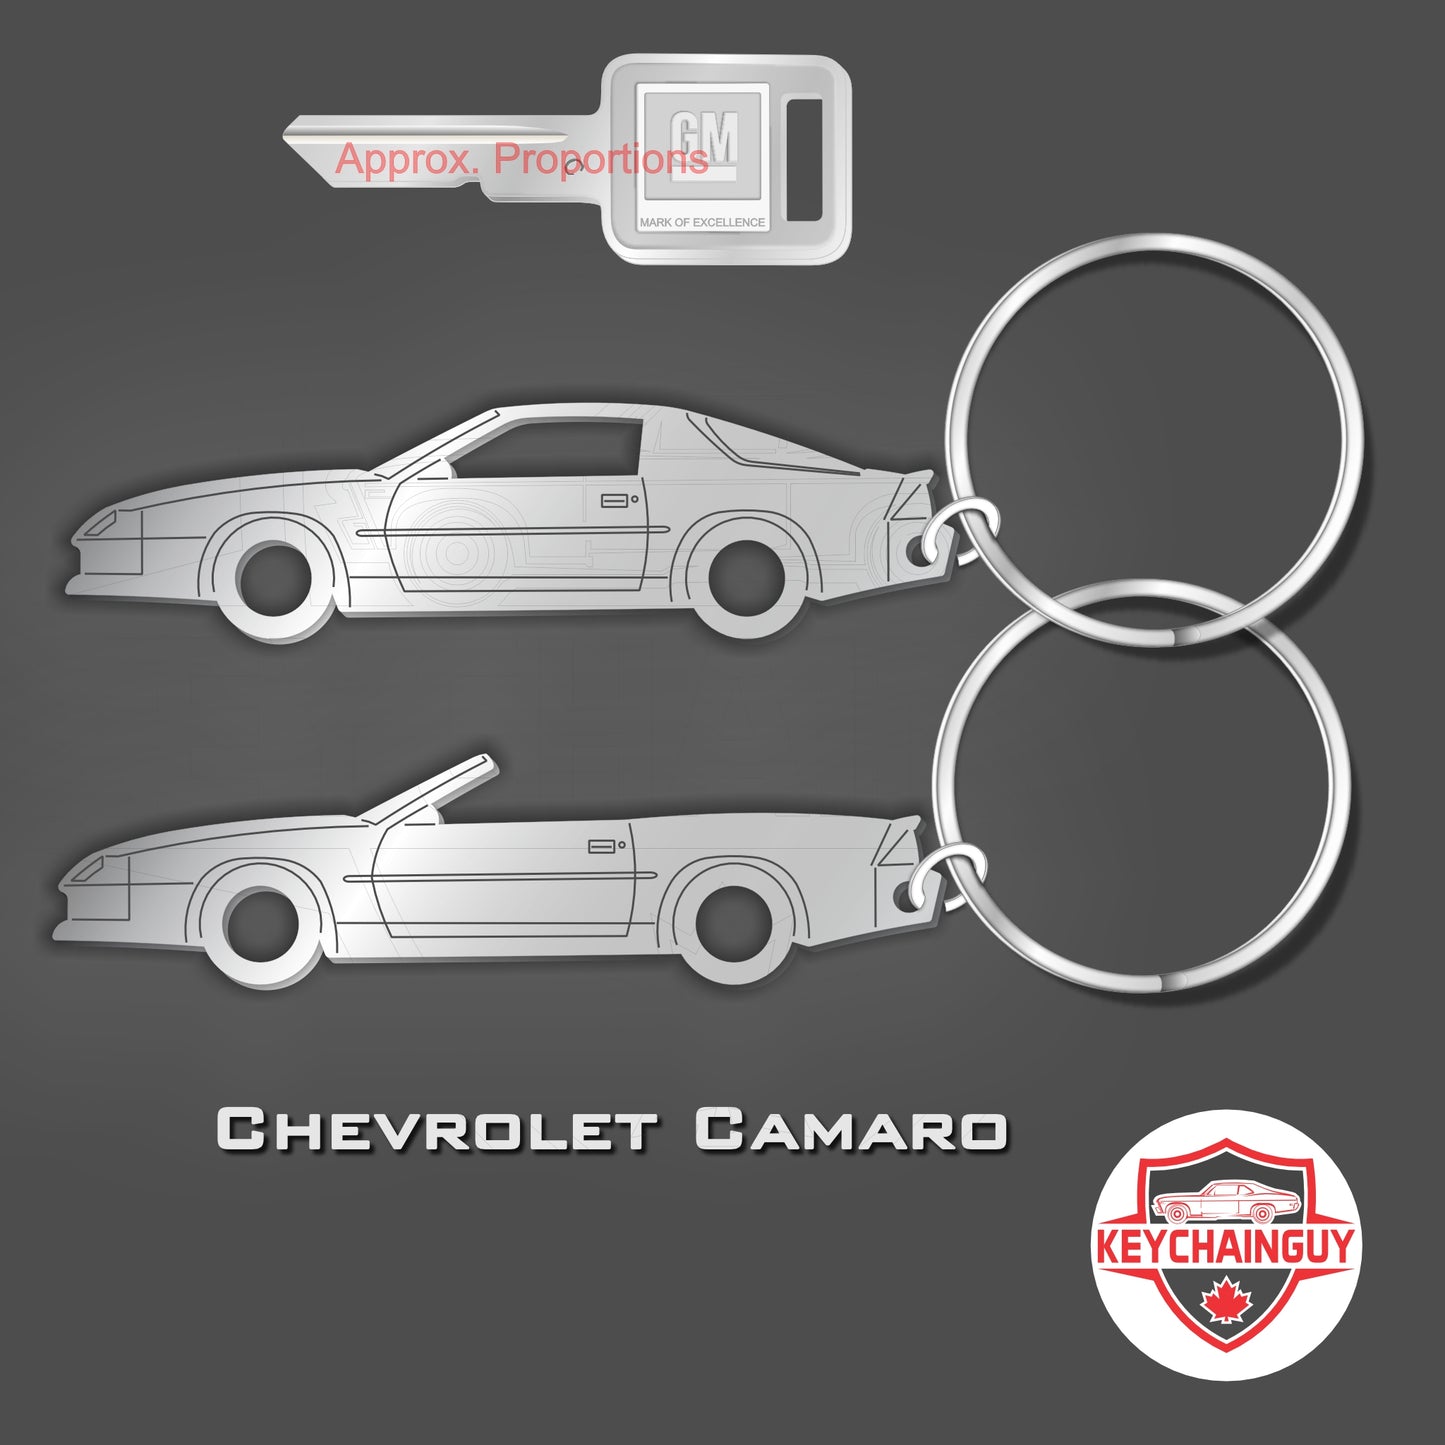 1982 -1992 Chevrolet Camaro (Gen 3)